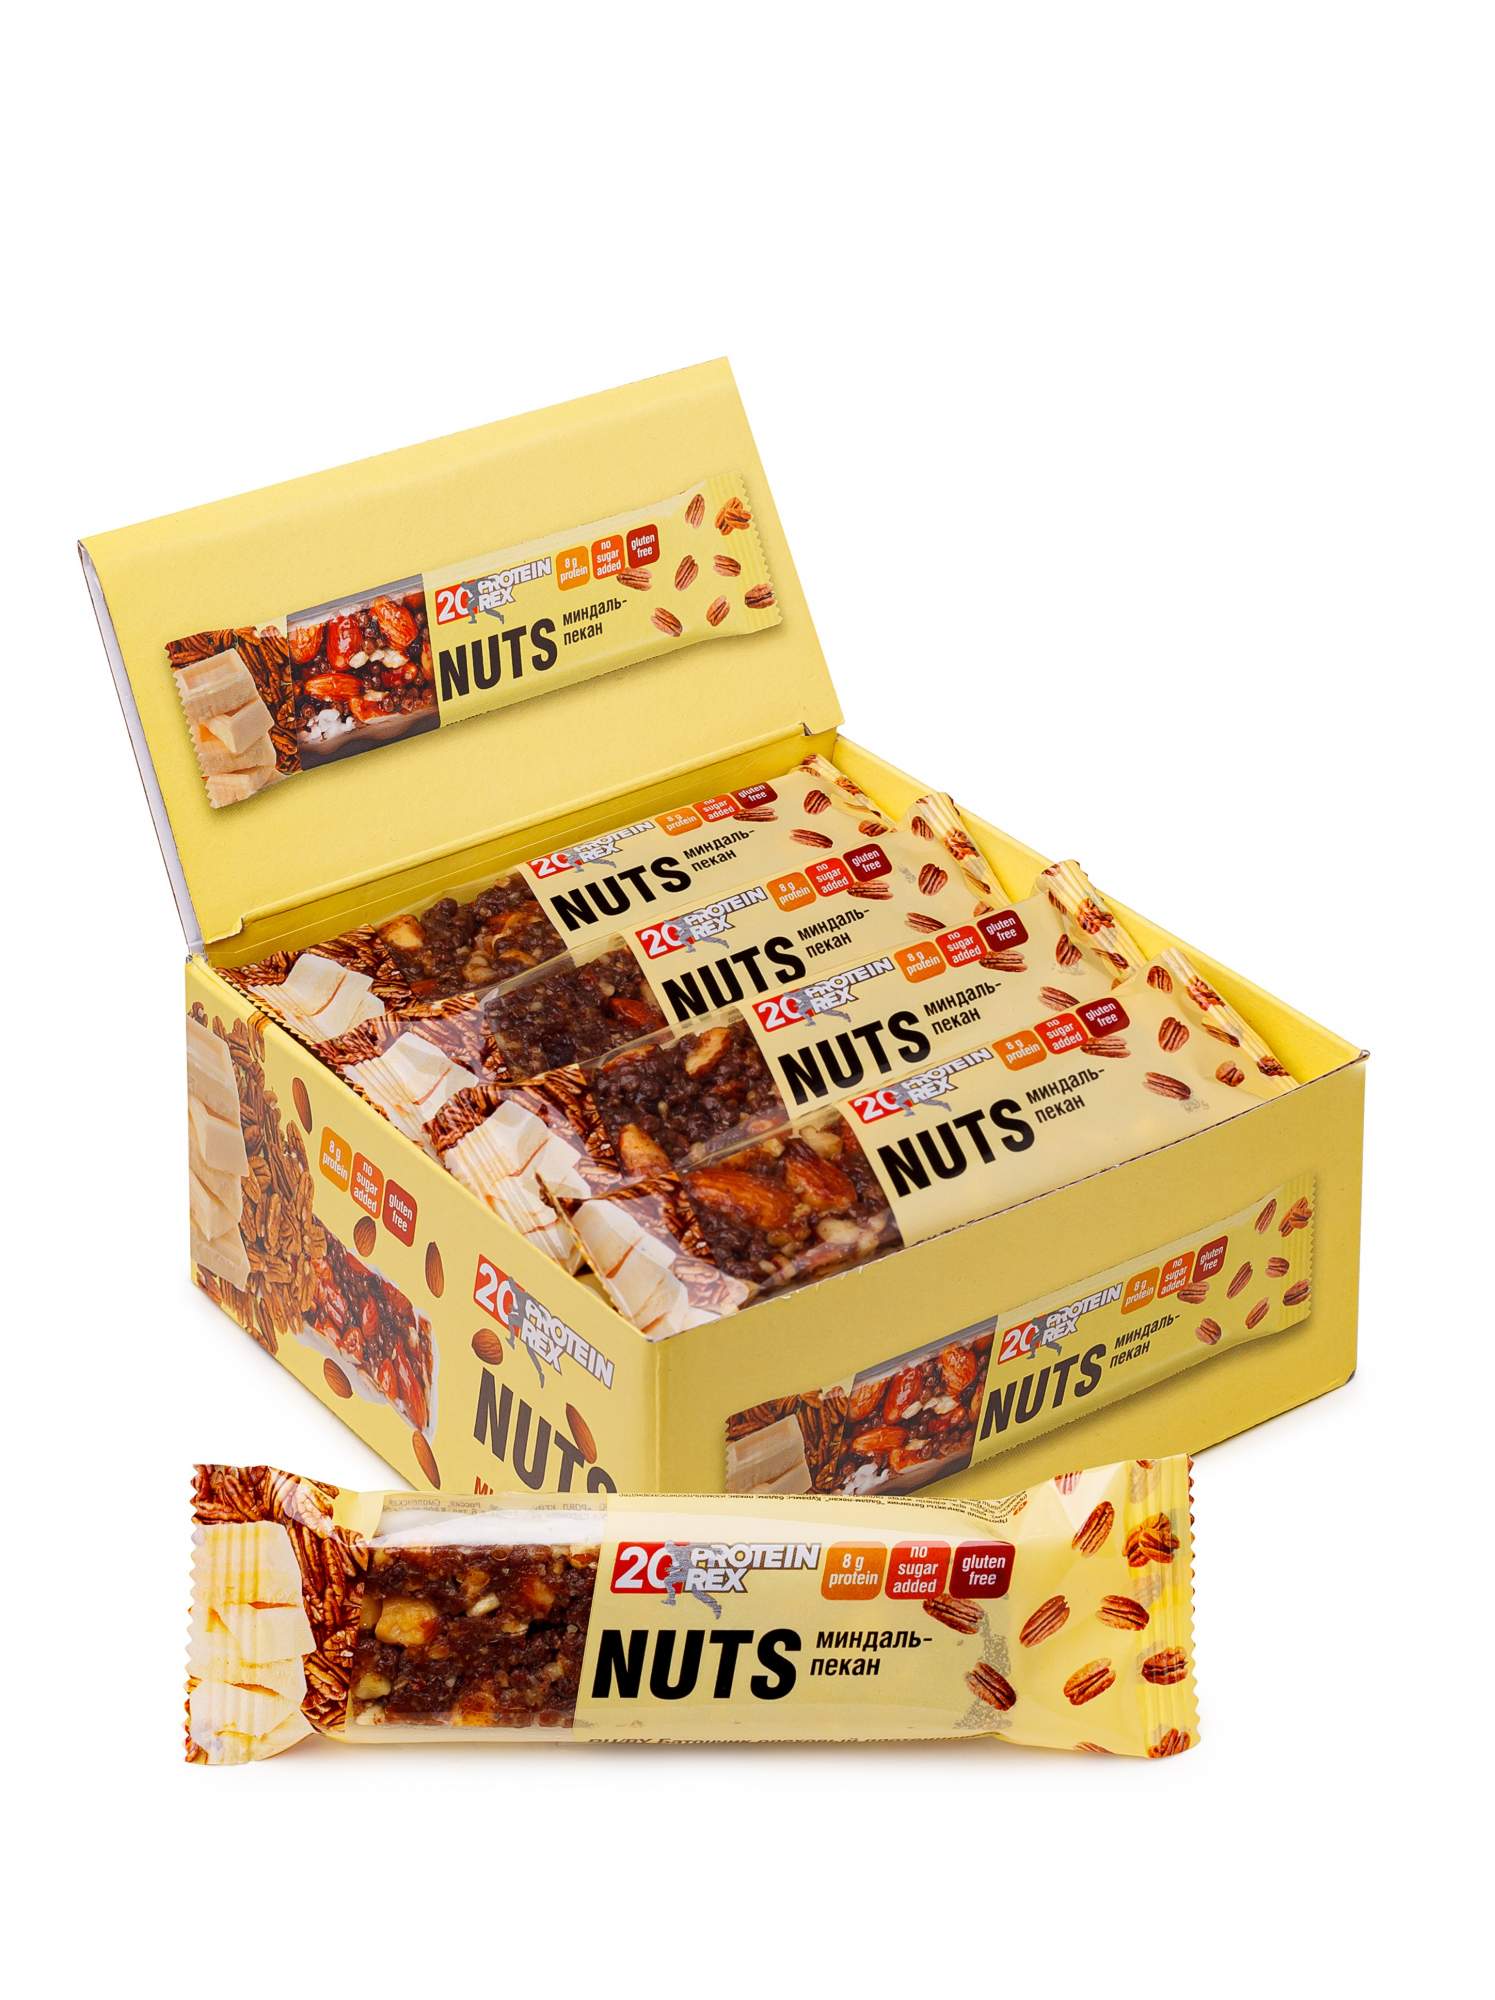 Протеиновый батончик ореховый Nuts (миндаль-пекан), 12шт х 40г, 170 ккал